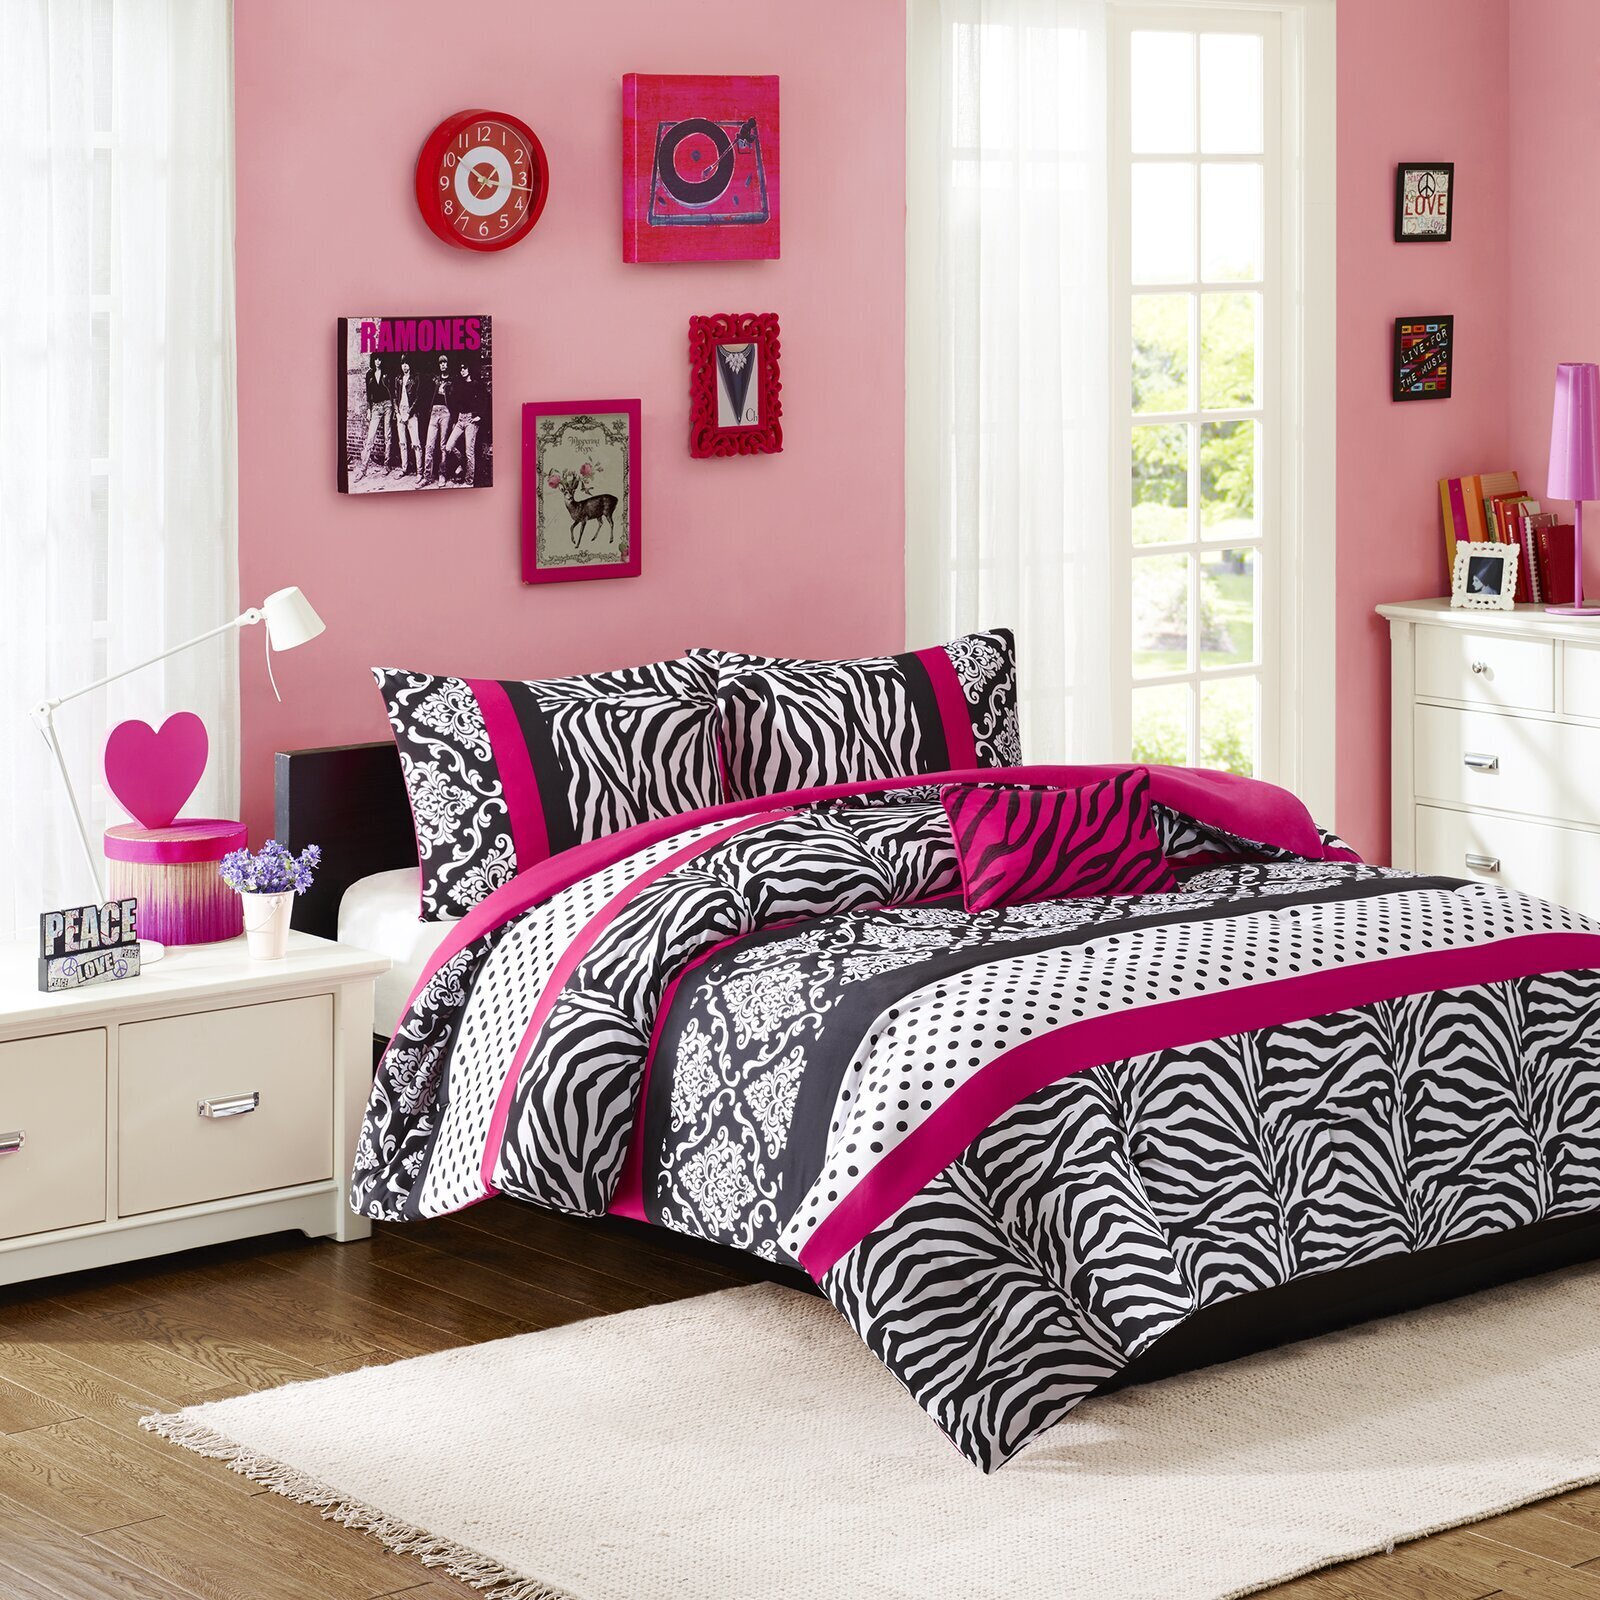 Pink zebra print bedding